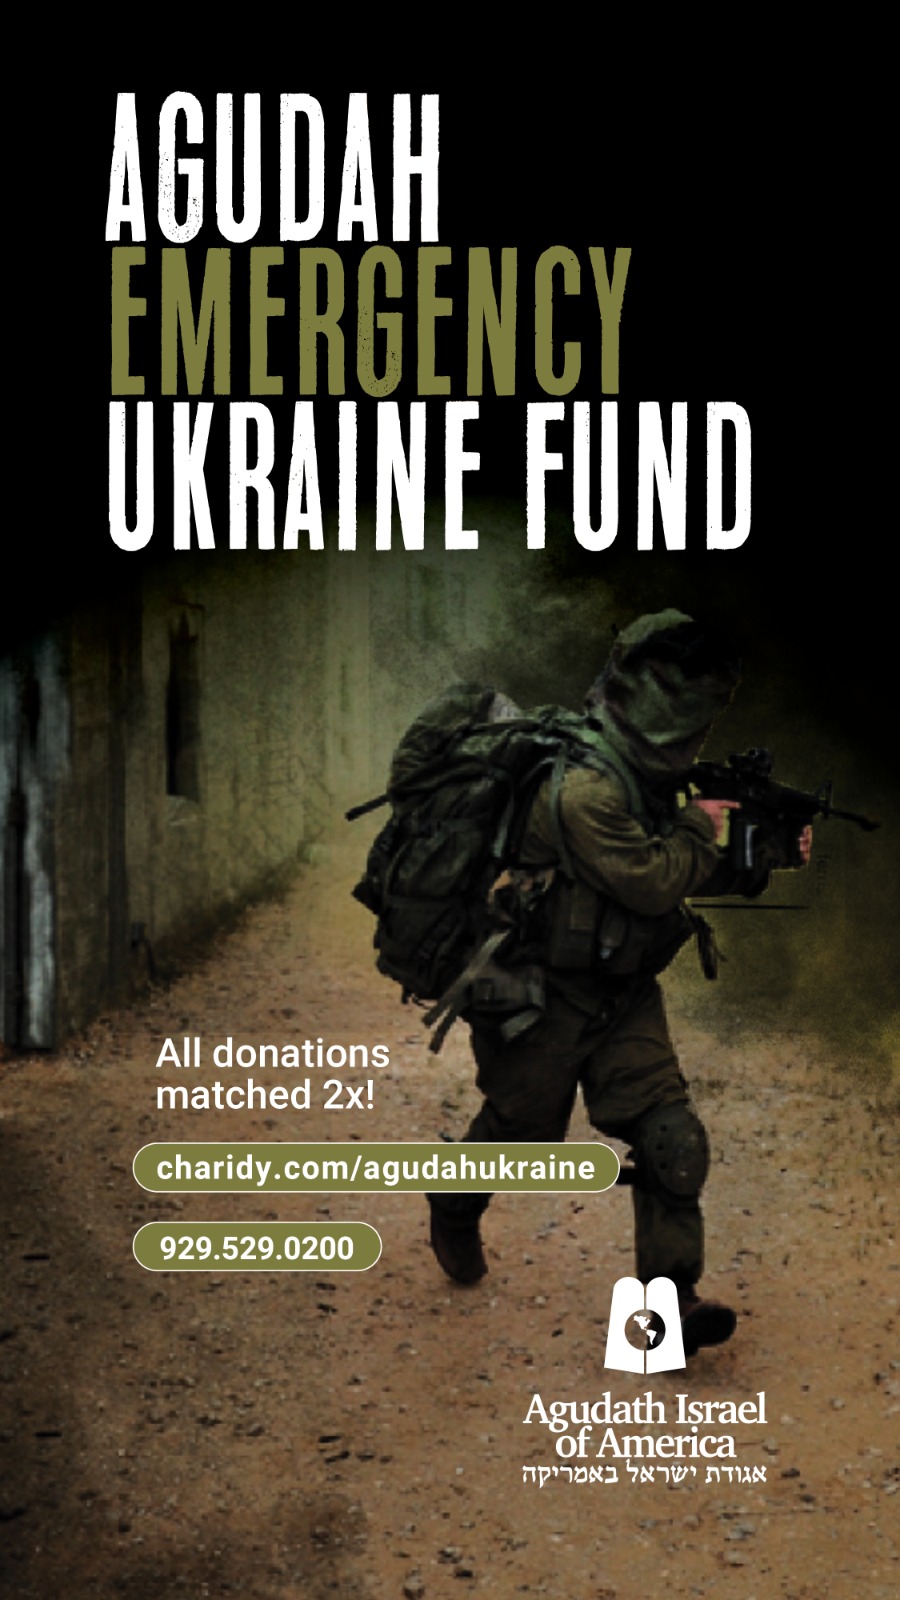 Save Jewish Lives. Agudah Emergency Ukraine Fund. All Donations Matched 2x